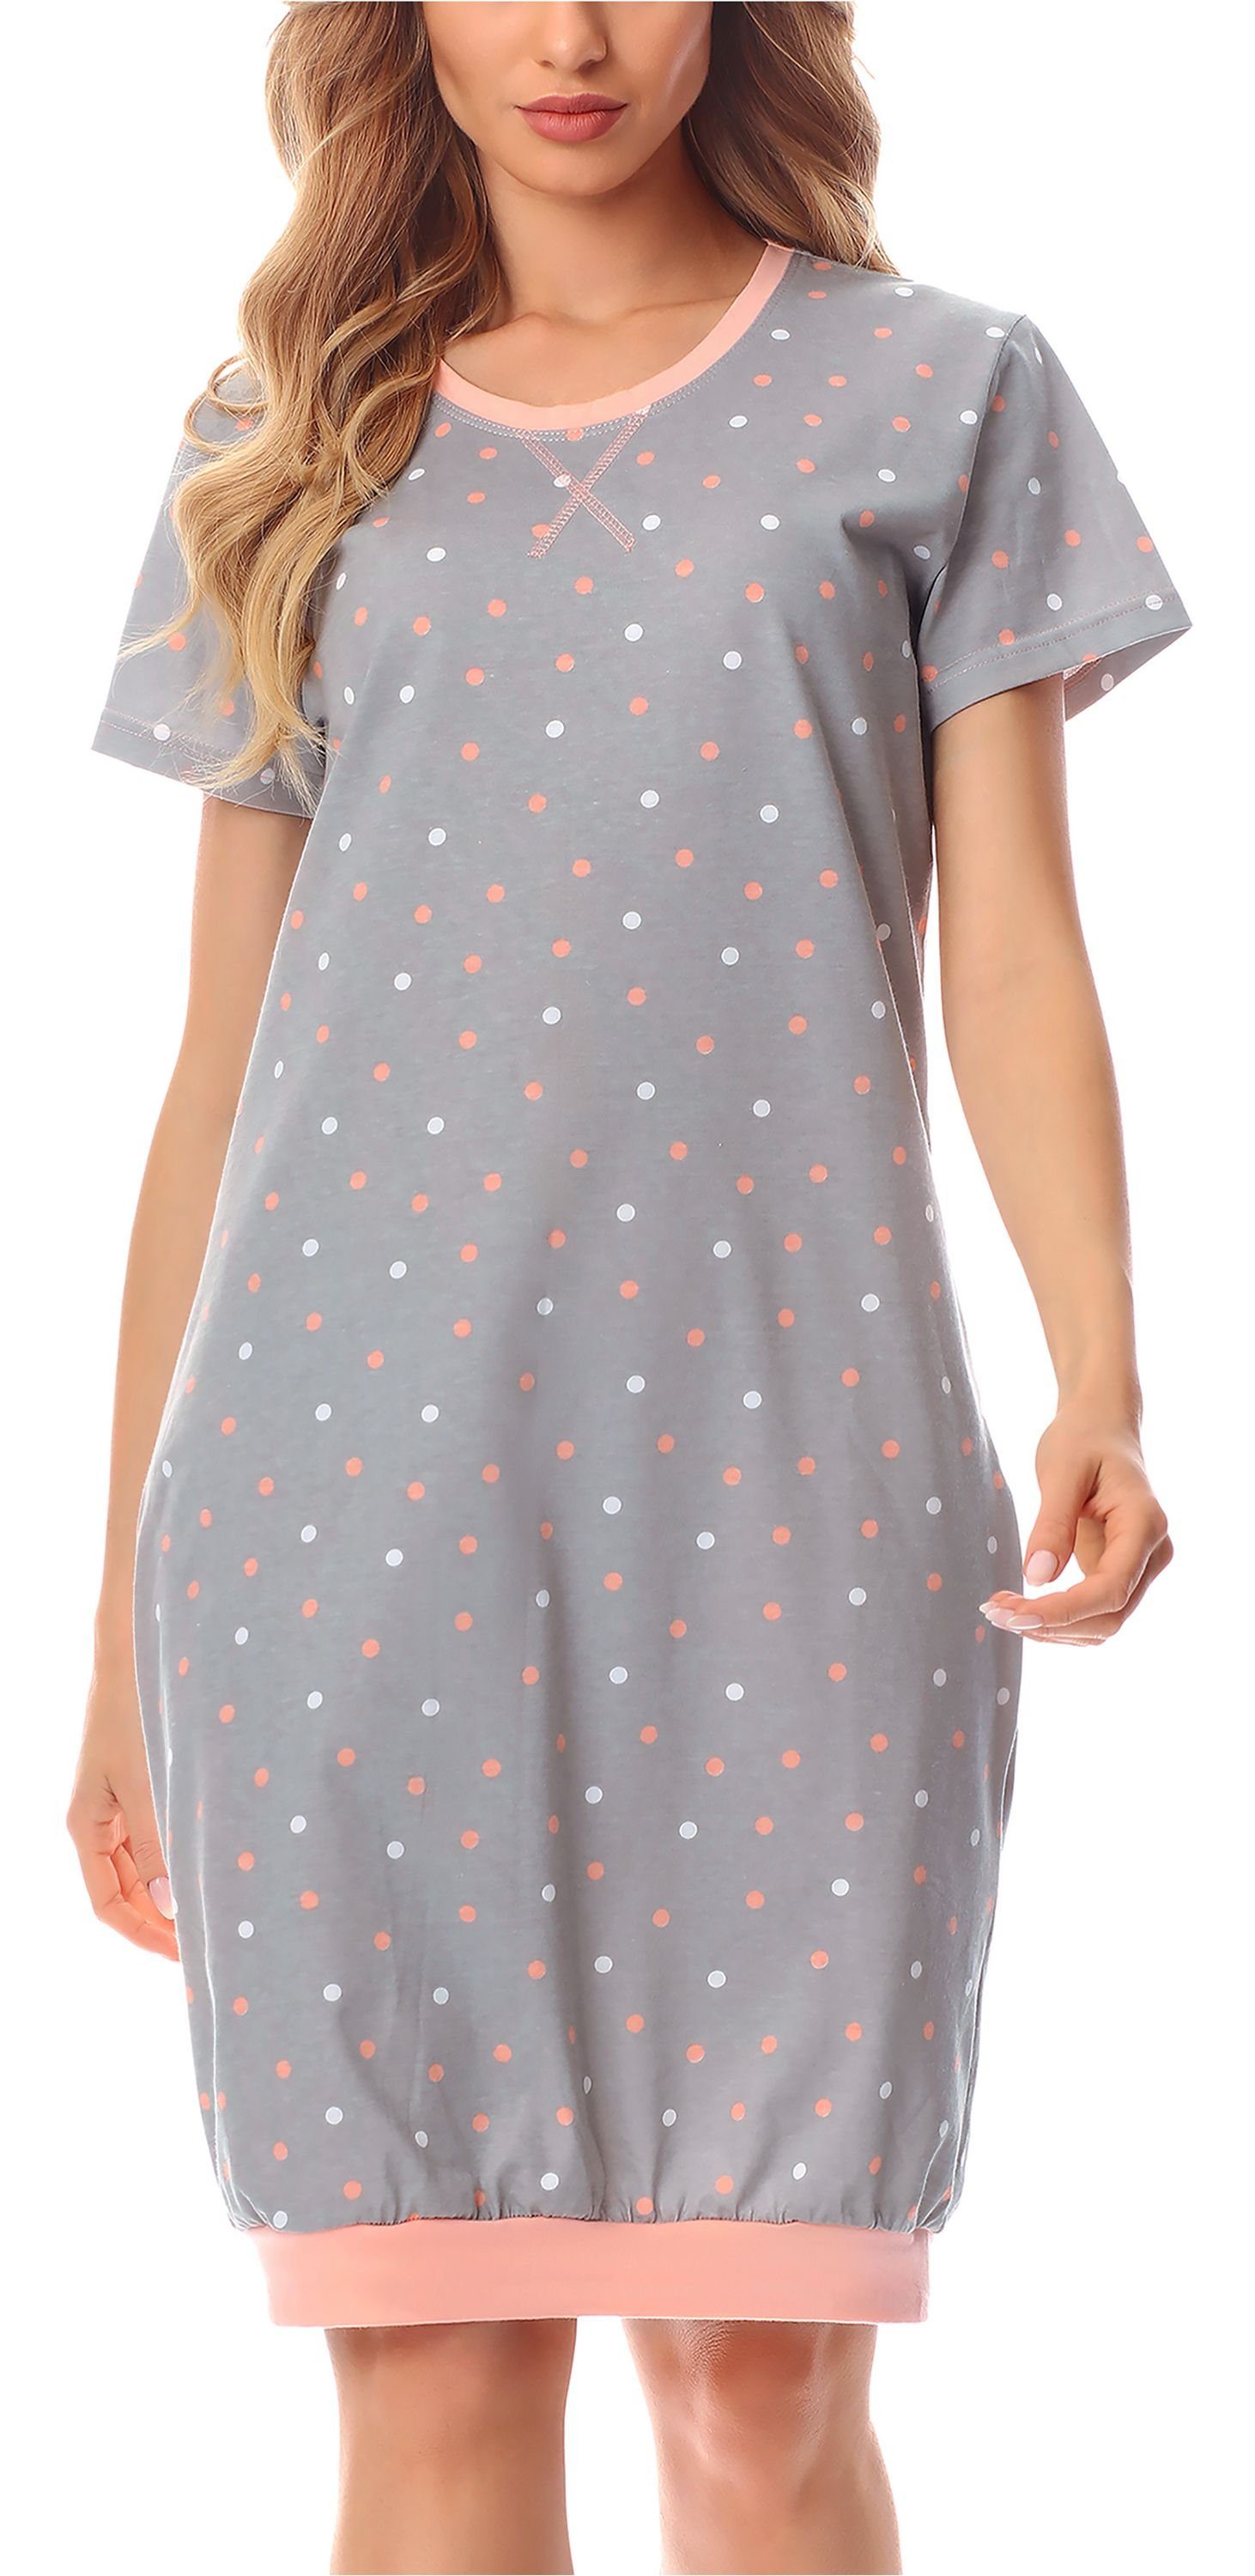 MS10-184 Grau/Punkten Merry Nachthemd Damen Nachthemd Style (1-tlg)